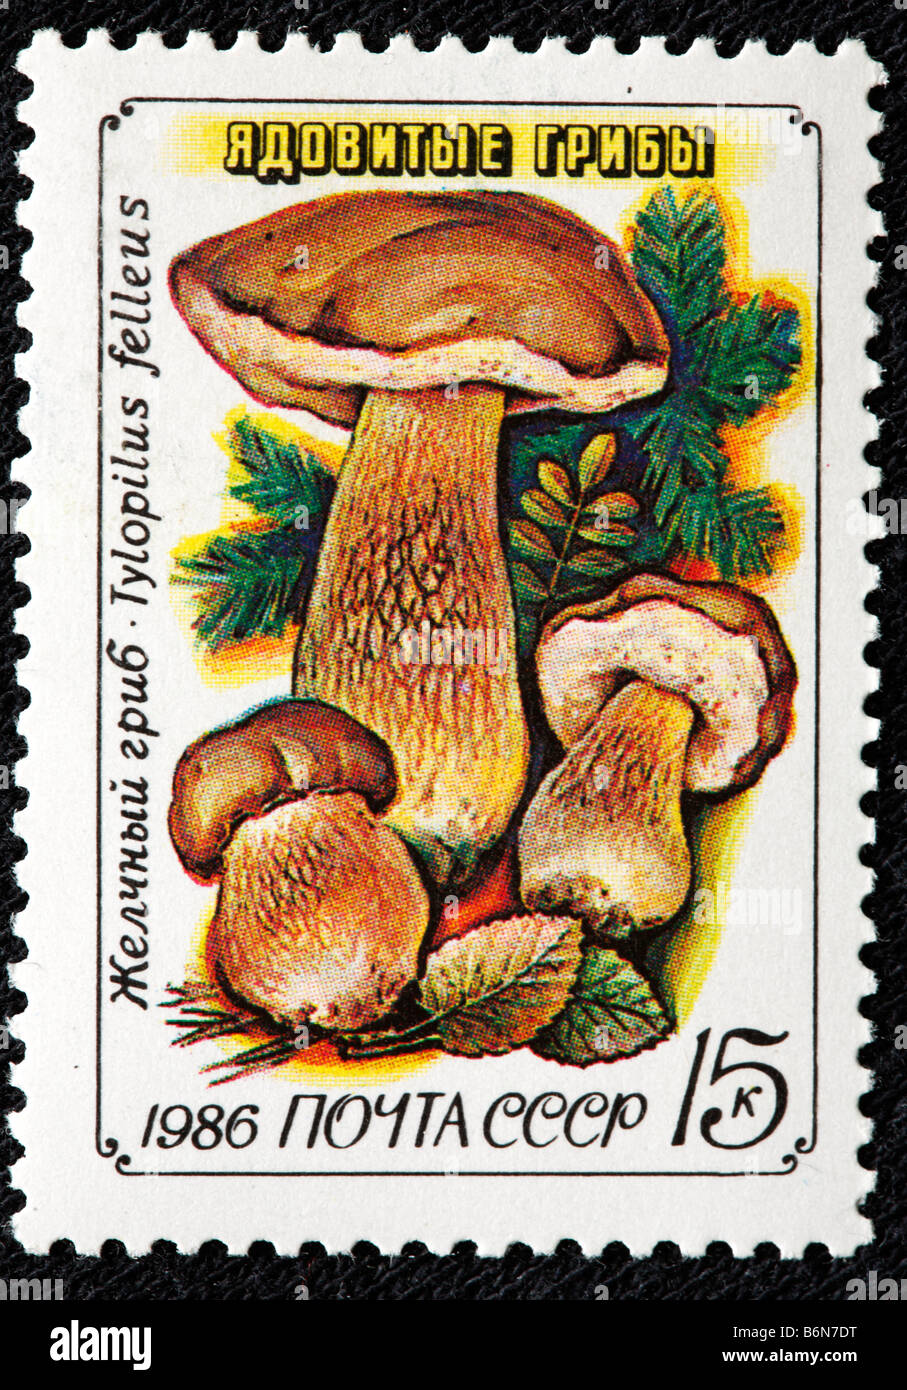 Tylopilus felleus (Boletus felleus), poisonous mushroom, postage stamp, USSR, Russia, 1986 Stock Photo